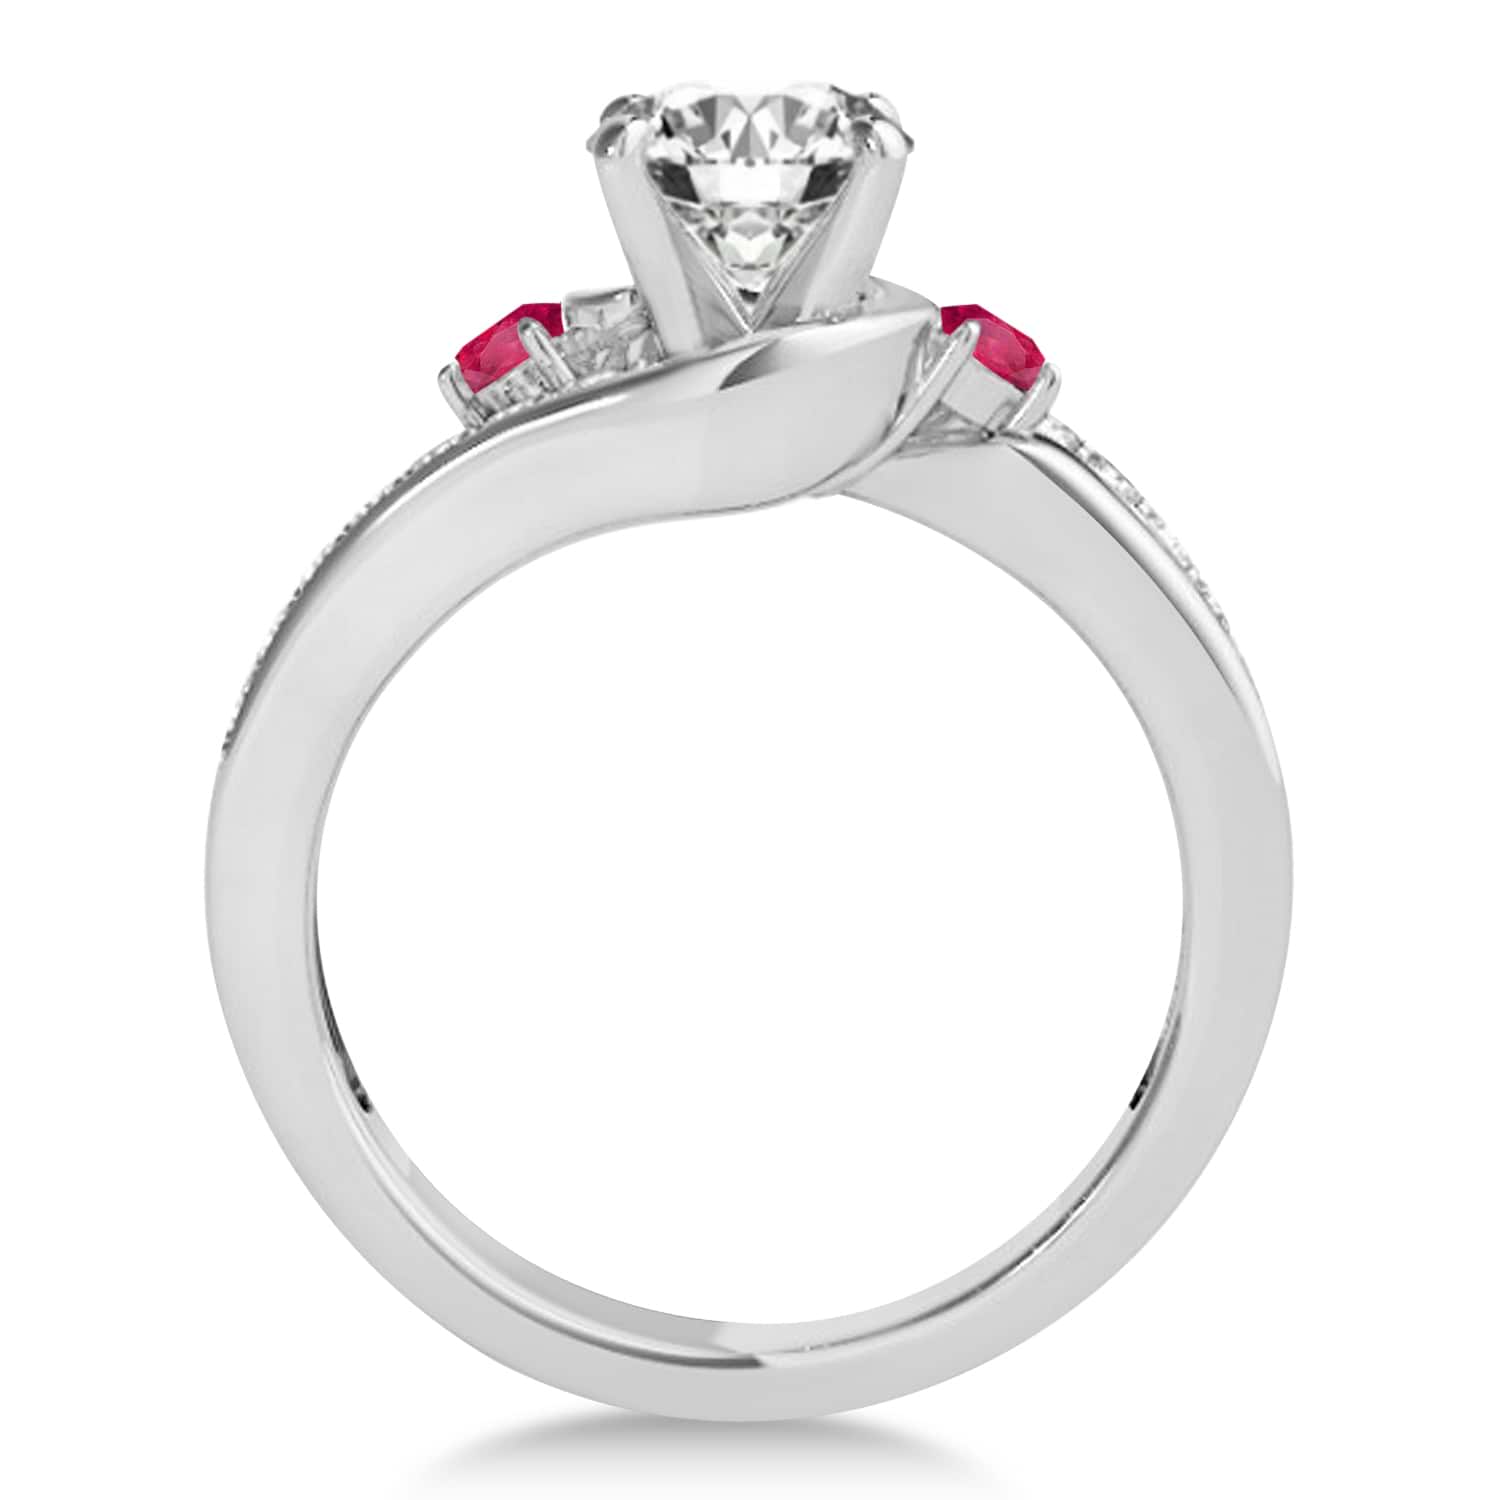 Swirl Design Ruby & Diamond Engagement Ring Setting 18k White Gold 0.38ct